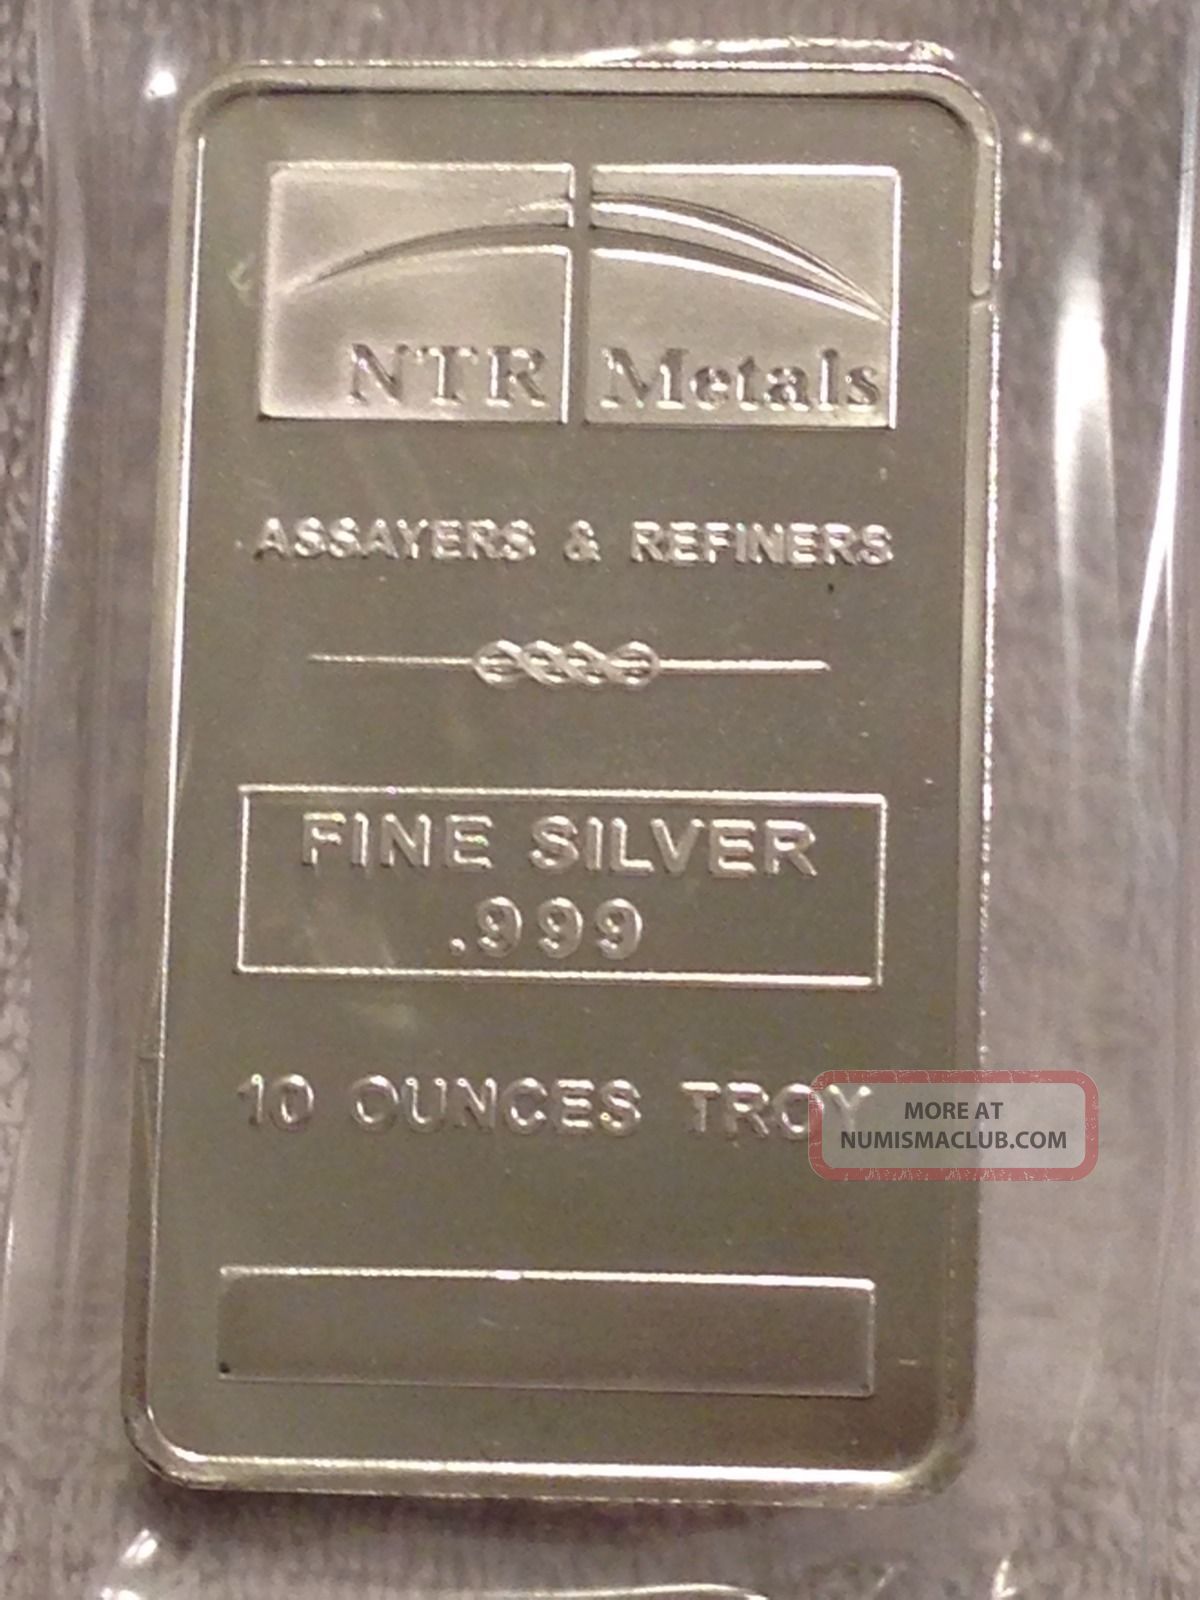 Ntr Metals 10oz. 999 Fine Silver Bar